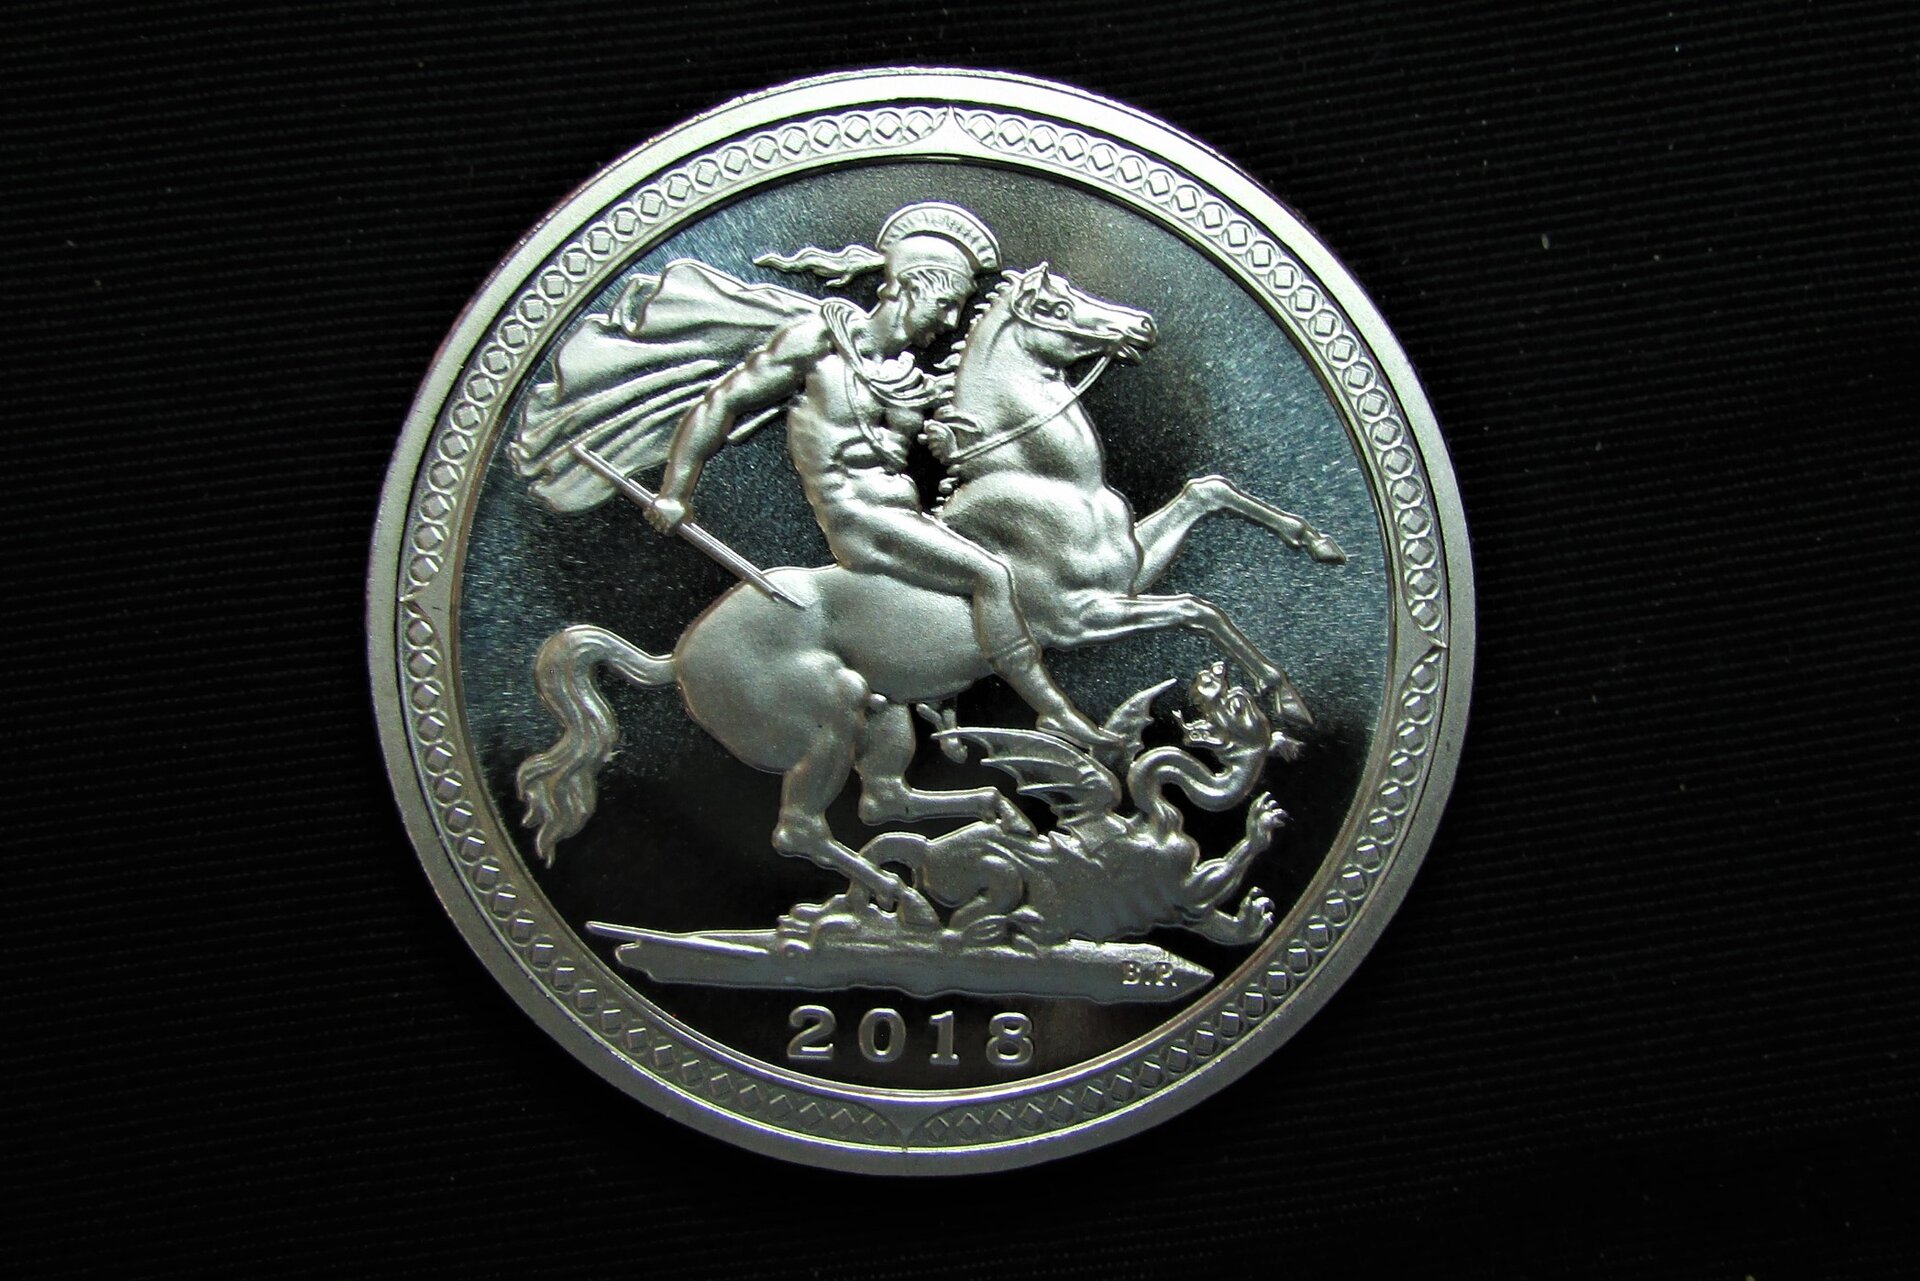 2018 KOTCT Medal (1 oz silver) - obverse.JPG